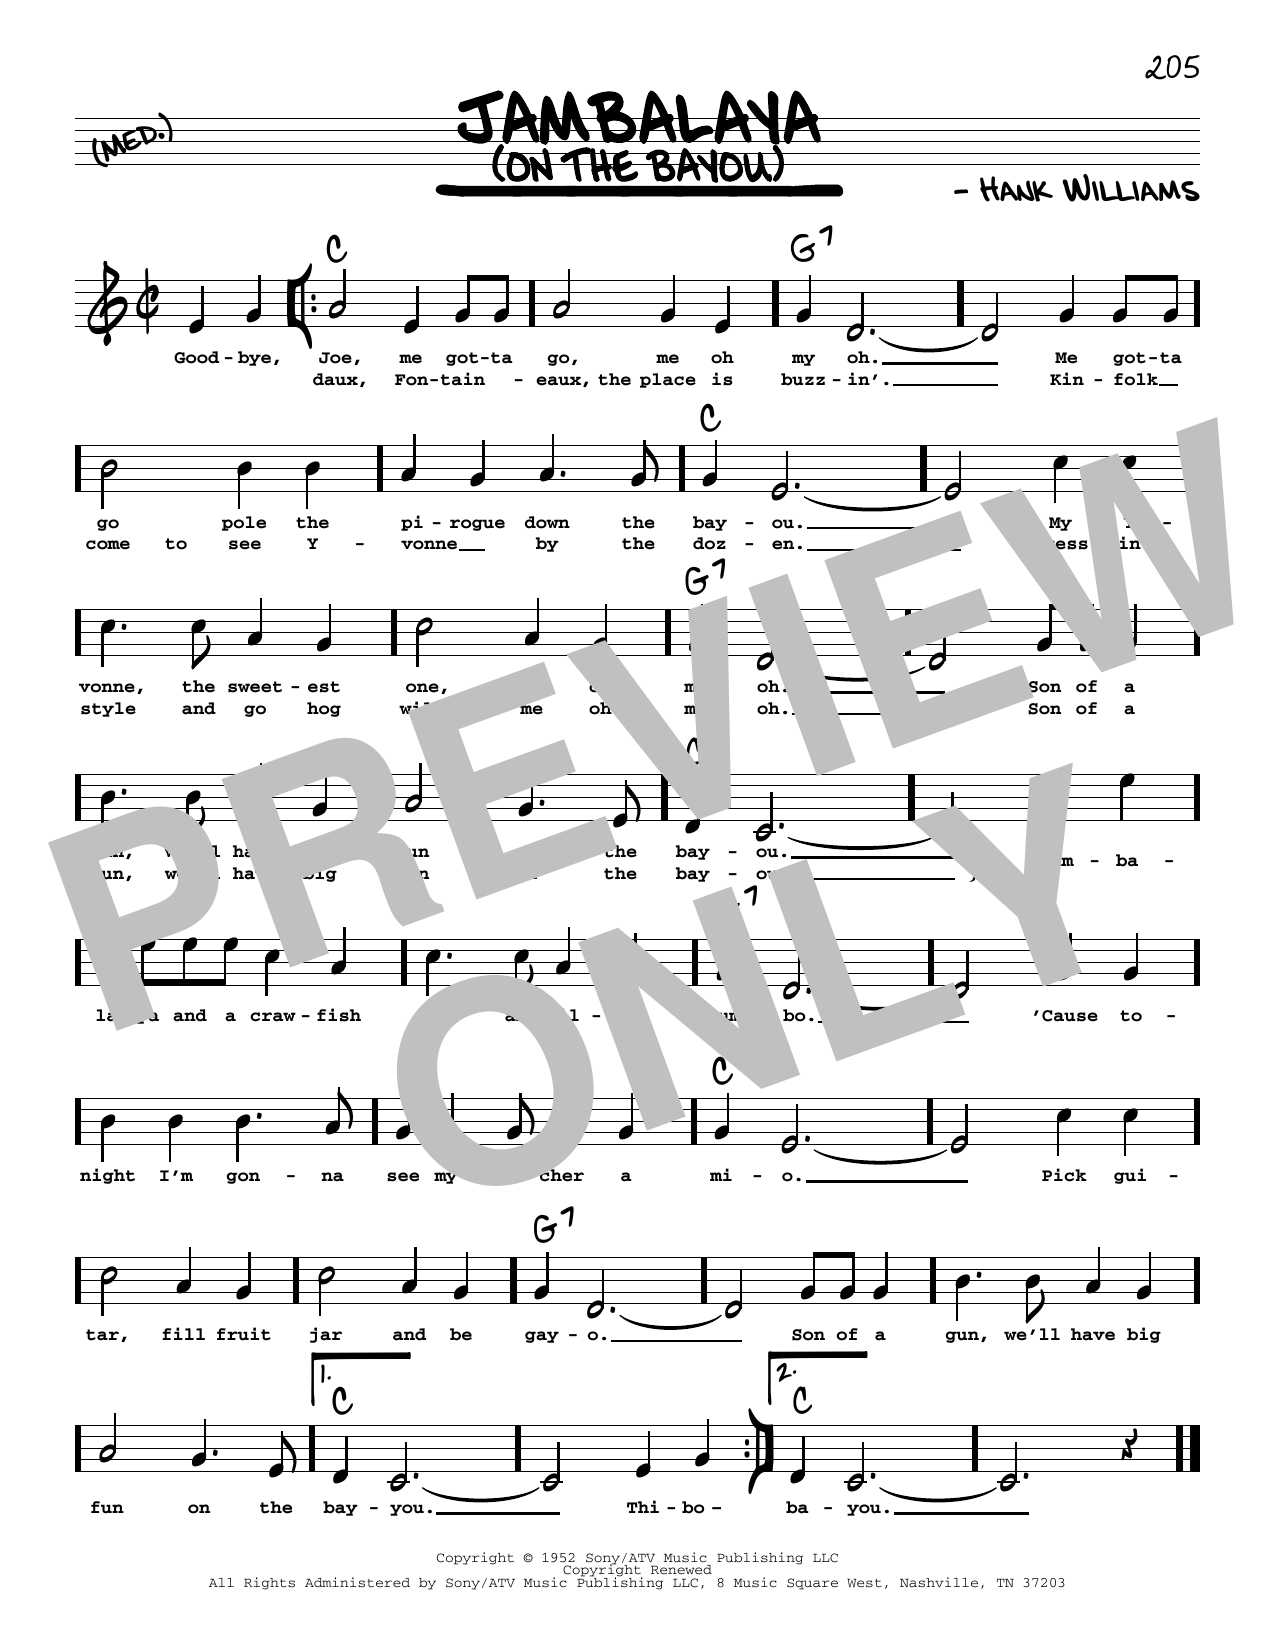 Hank Williams Jambalaya (On The Bayou) (High Voice) Sheet Music Notes & Chords for Real Book – Melody, Lyrics & Chords - Download or Print PDF